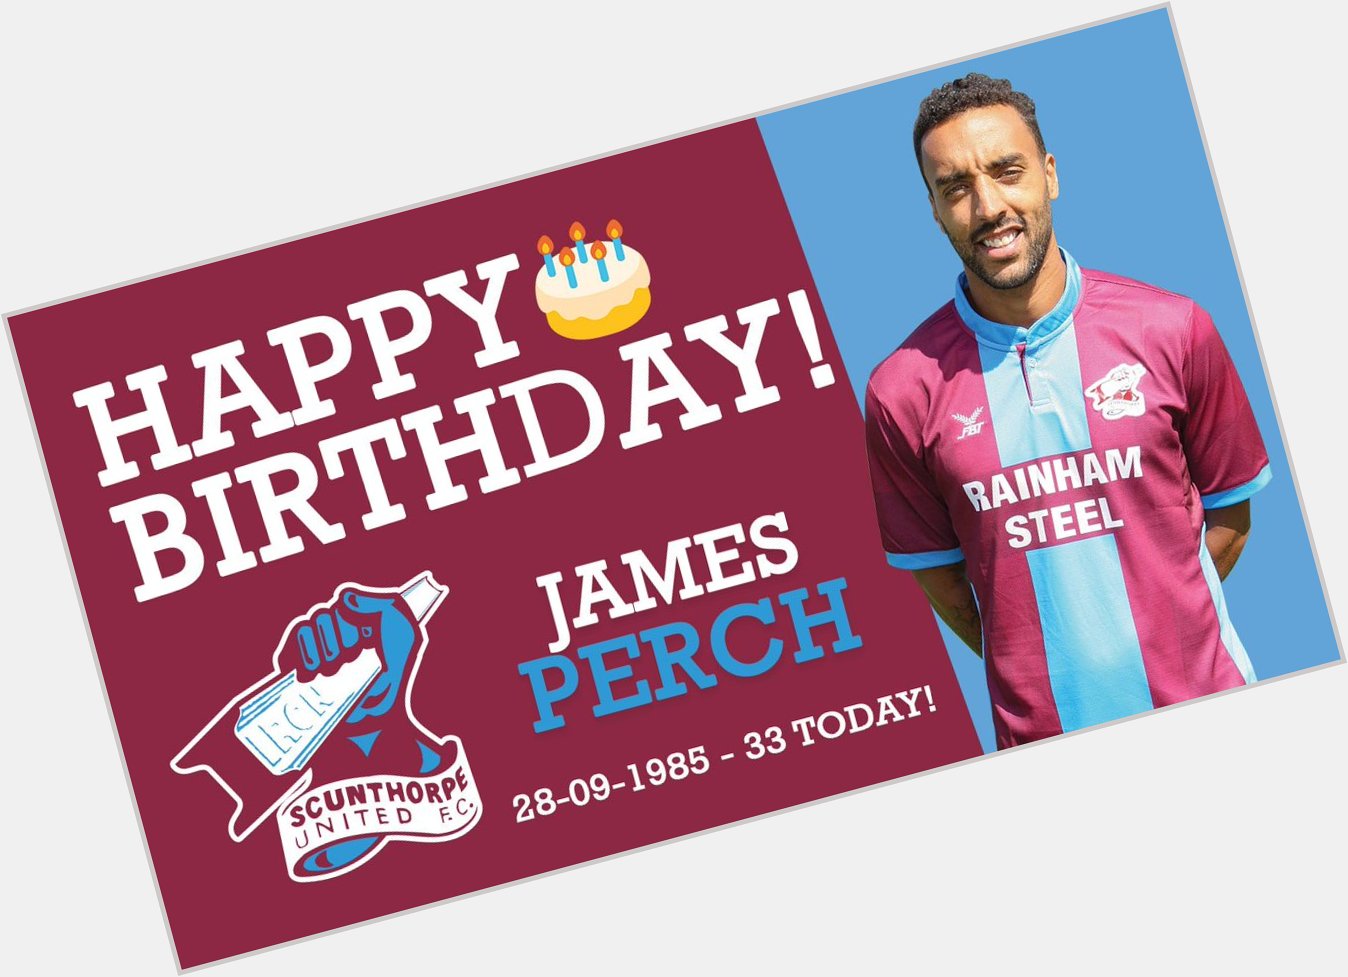   BIRTHDAY: Happy 33rd birthday to the Iron\s James Perch. 